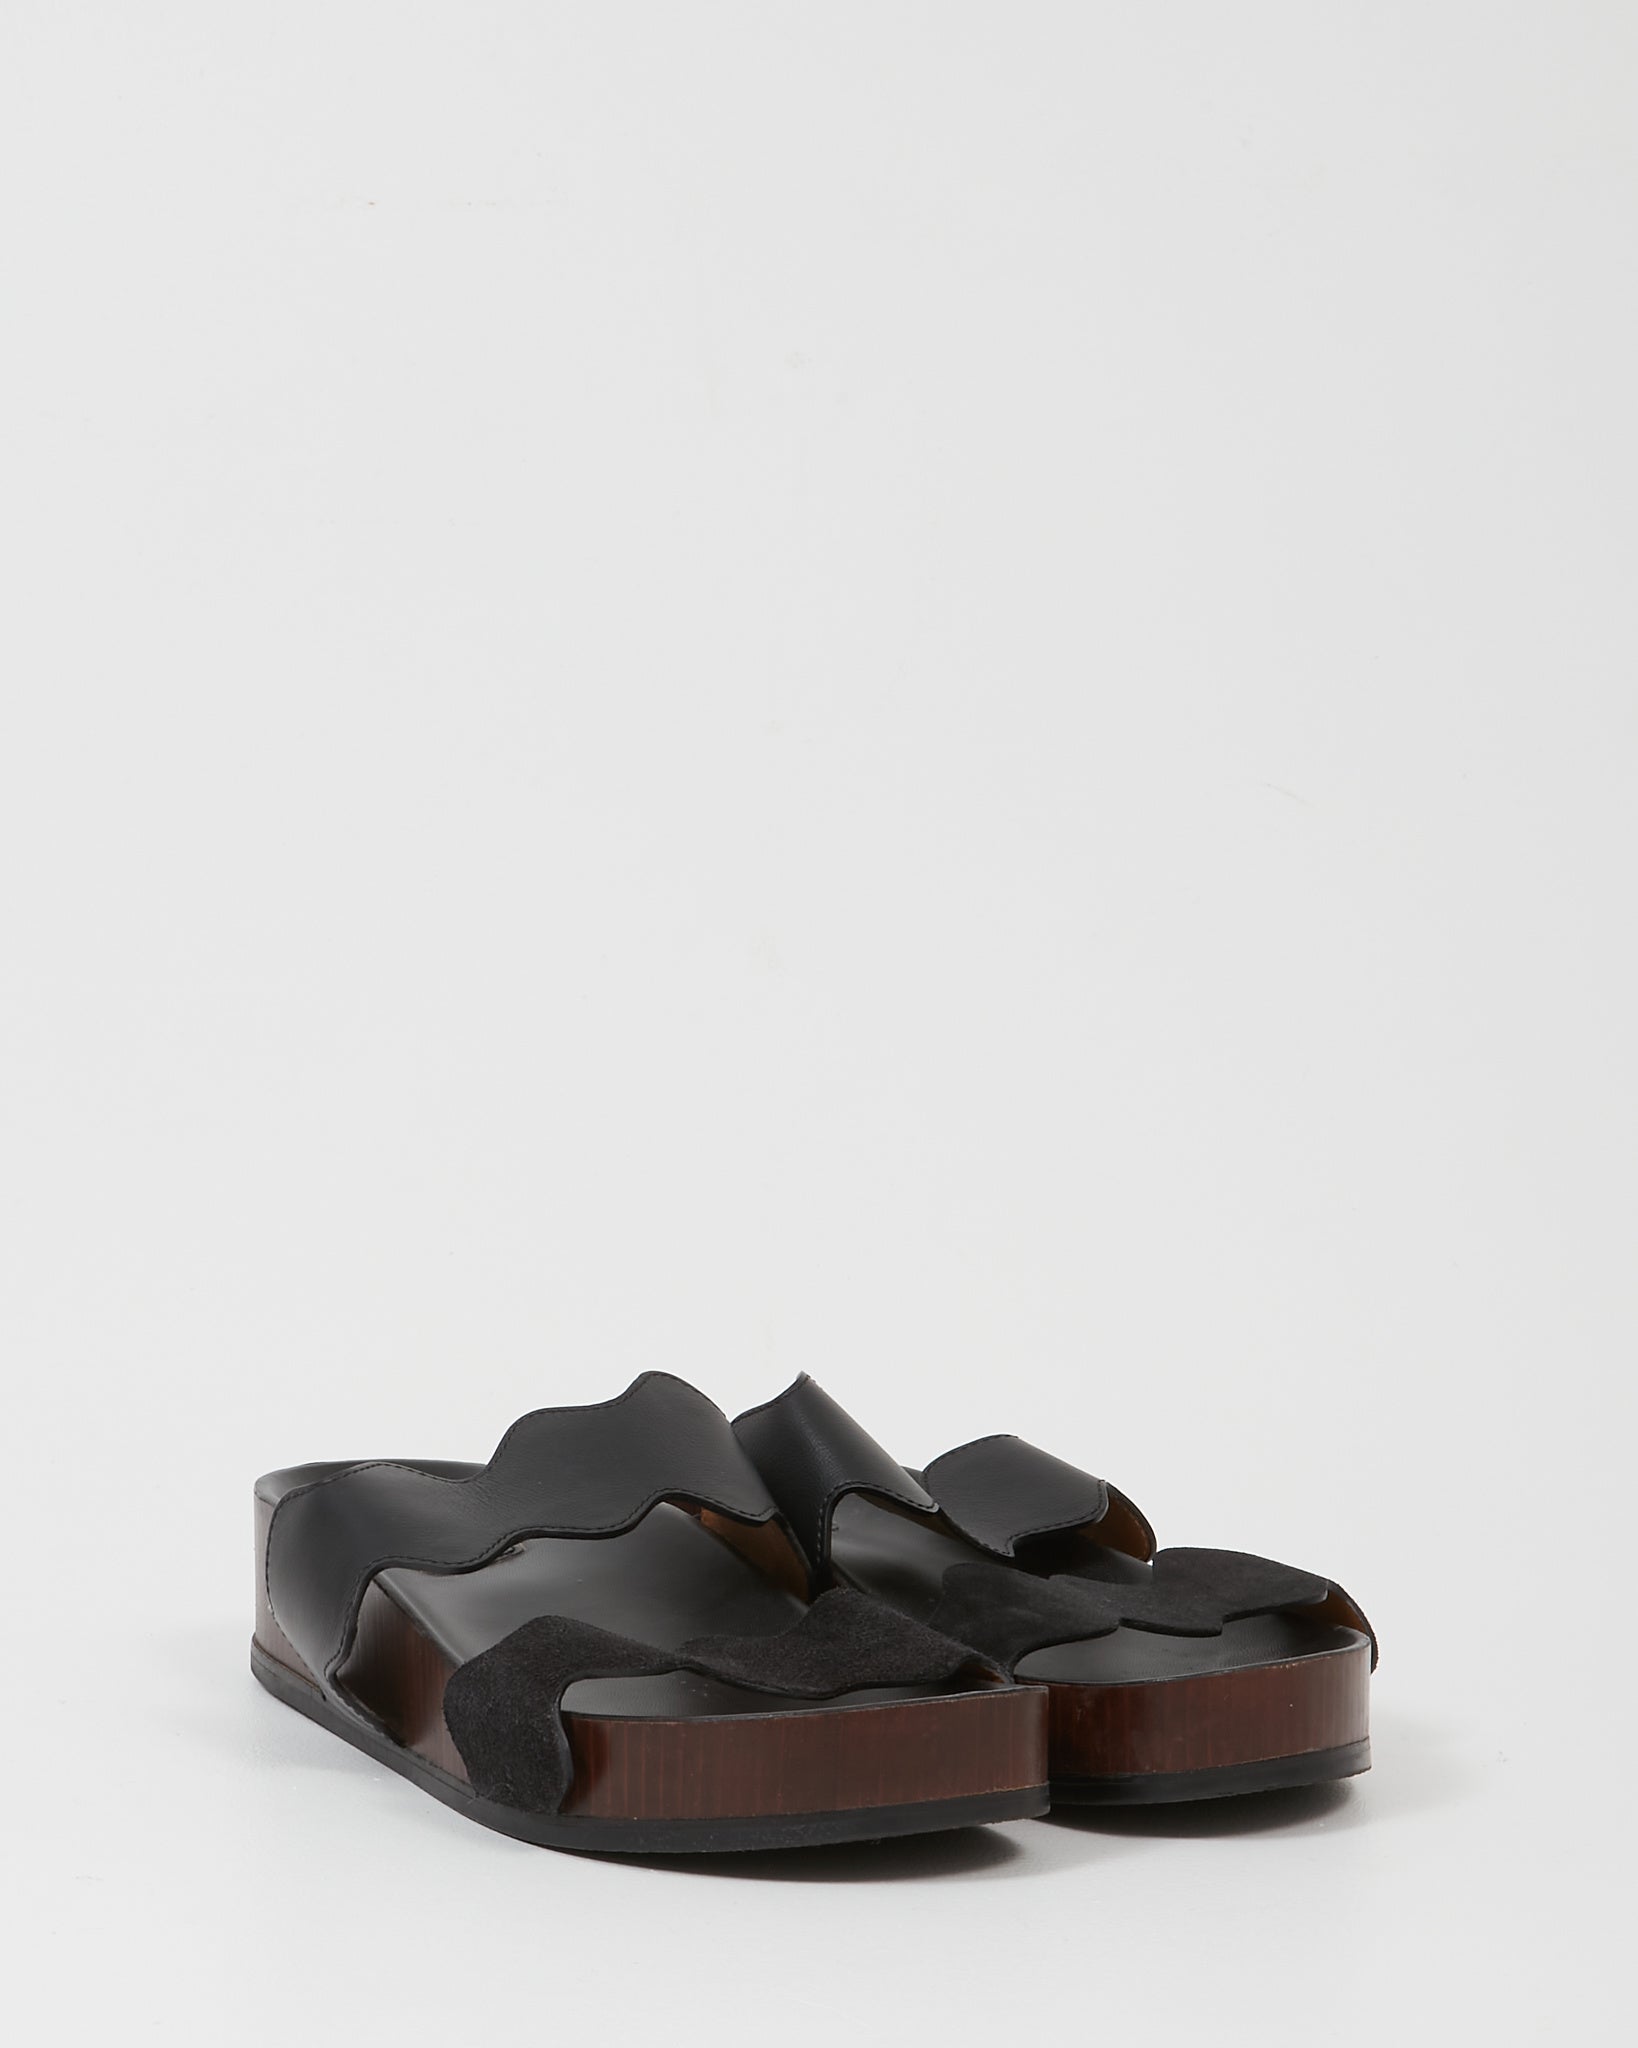 Chloé Black Leather/Suede Slip On Sandal - 39